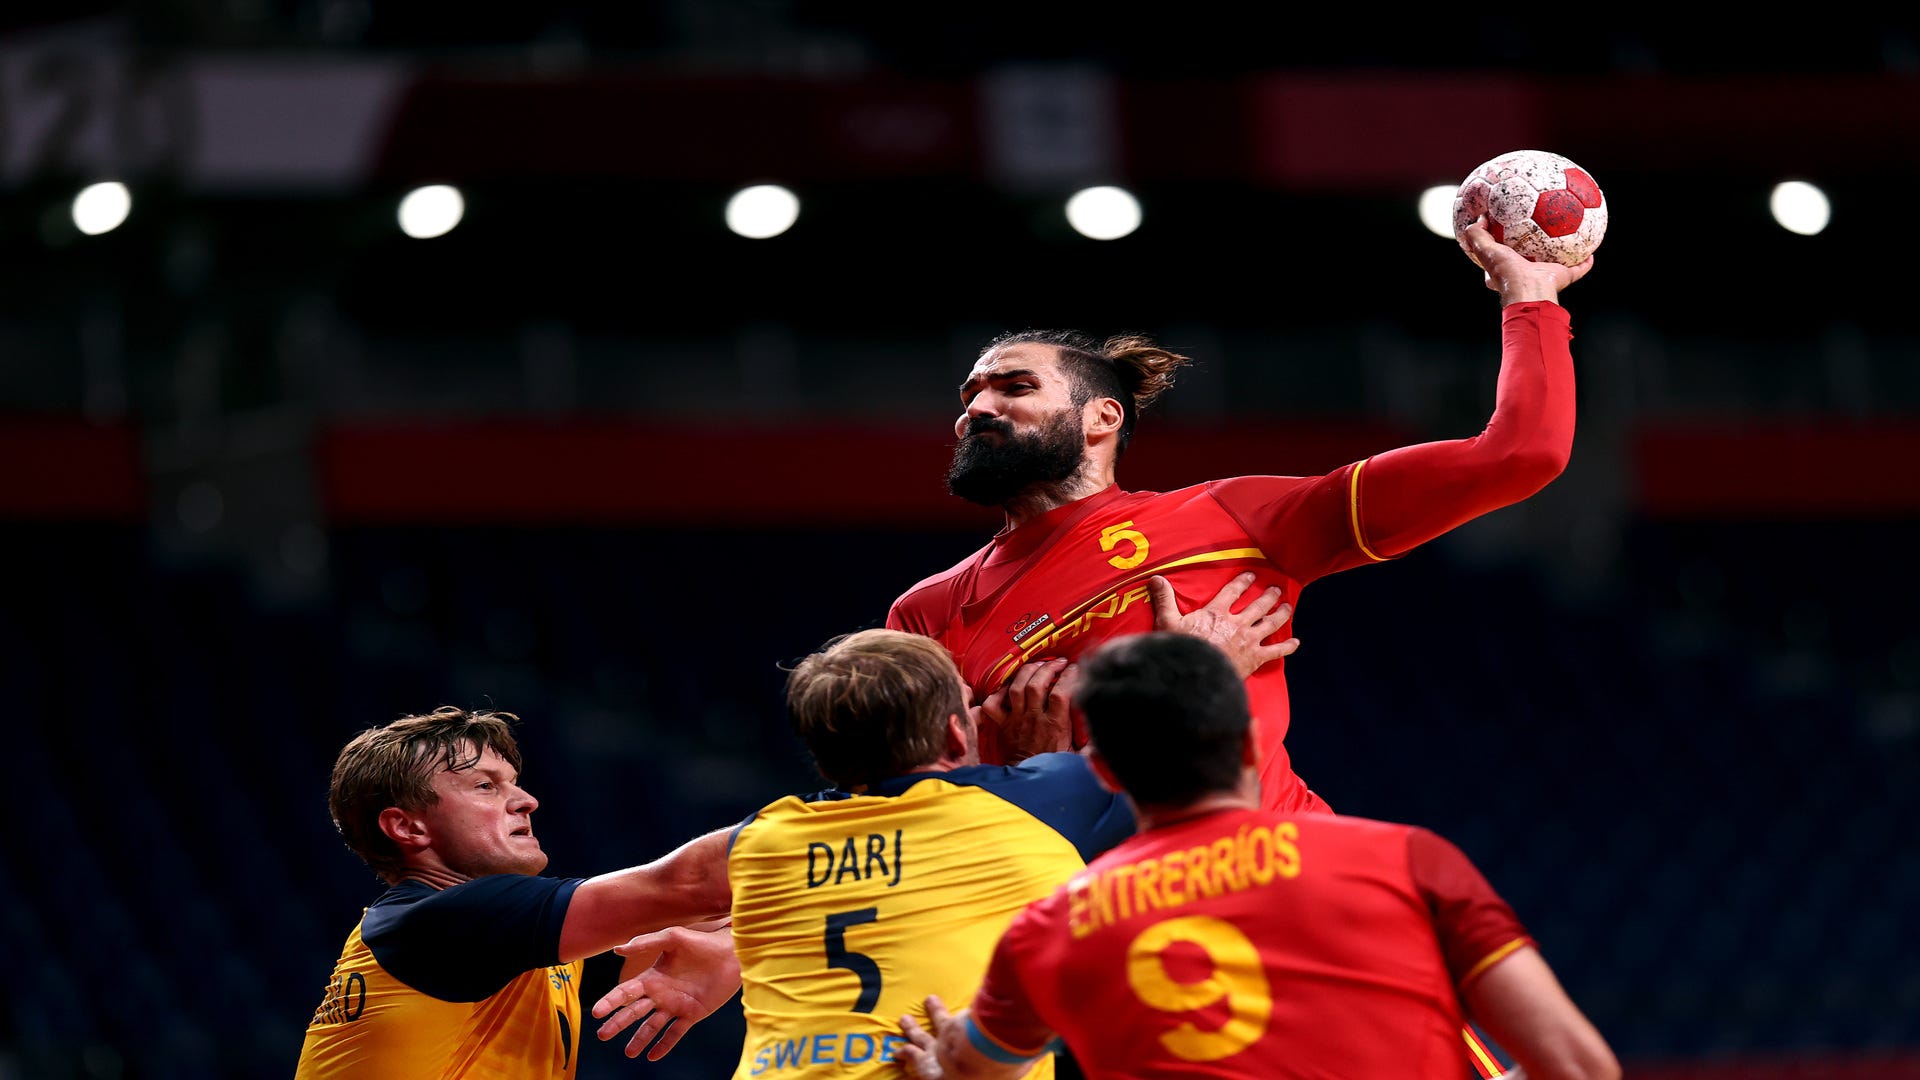 schweden gegen spanien handball live